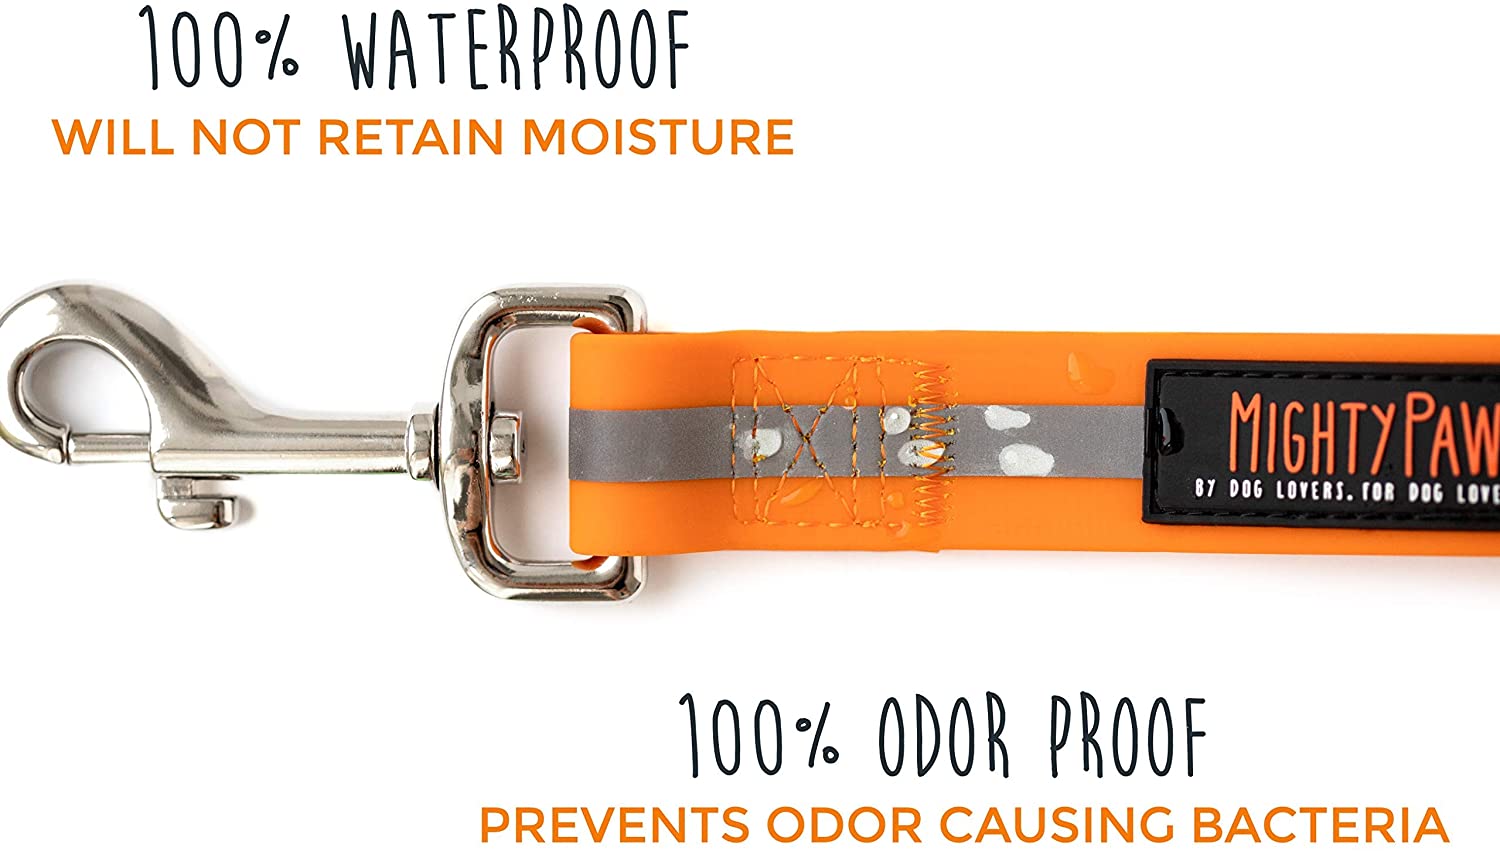 Waterproof Dog Leash, PVC Coated Webbing